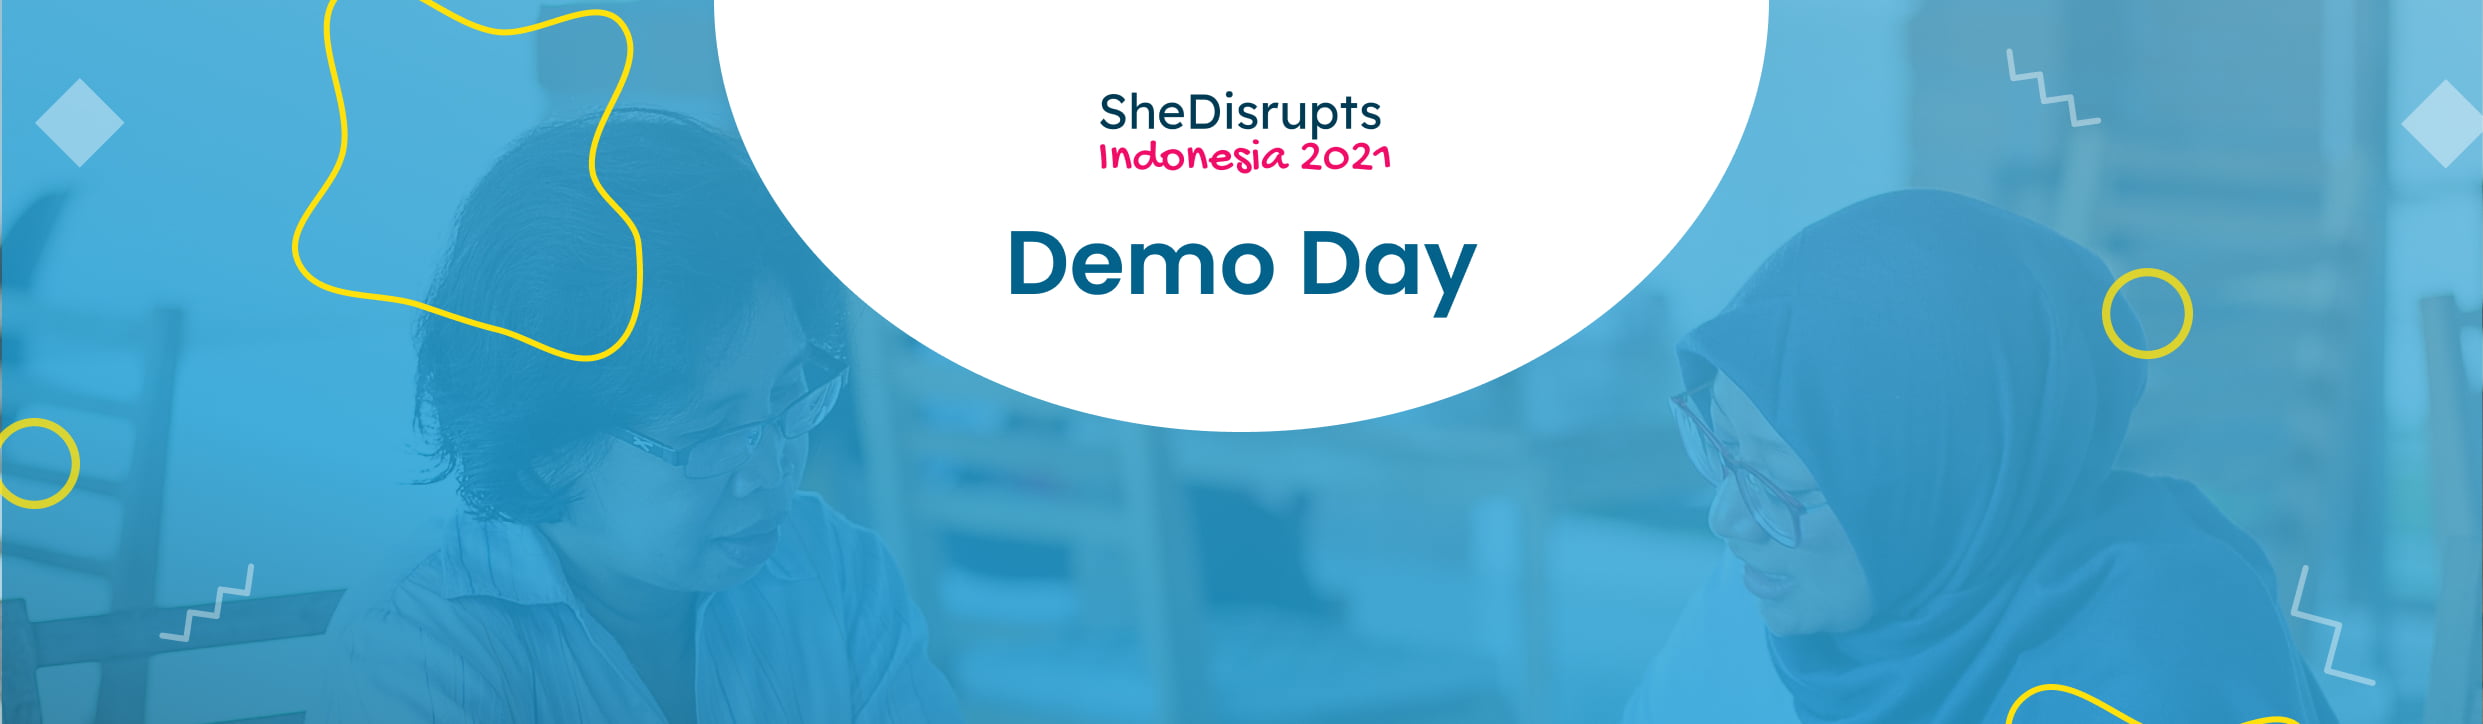 SheDisrupts Indonesia 2021 Demo Day